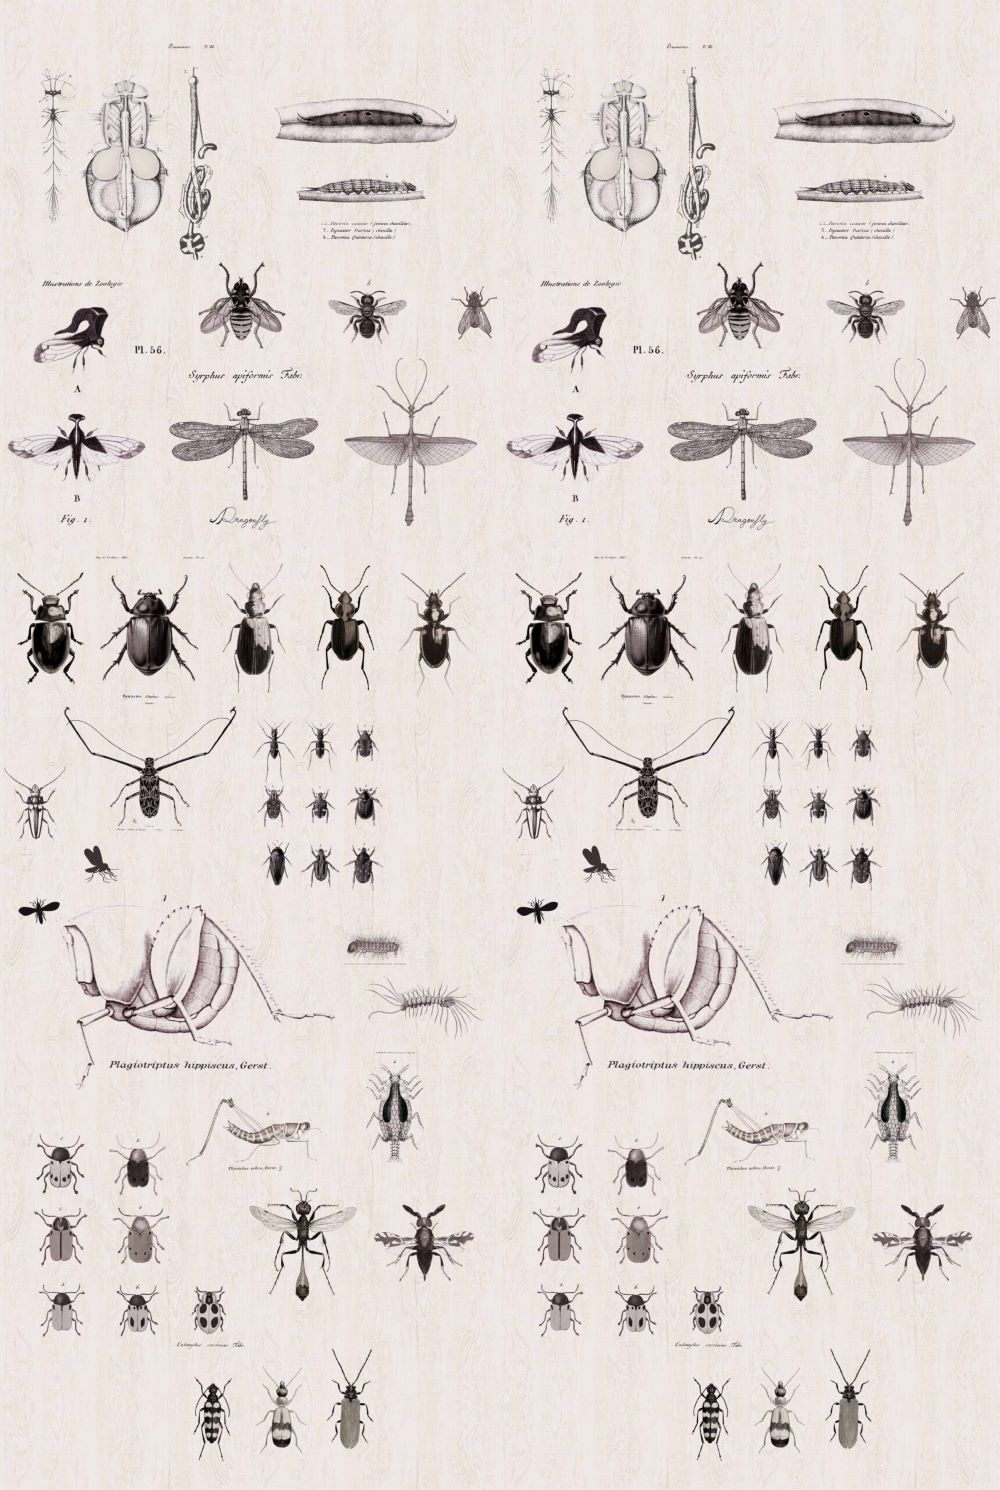 Studio Onszelf Behang Insects